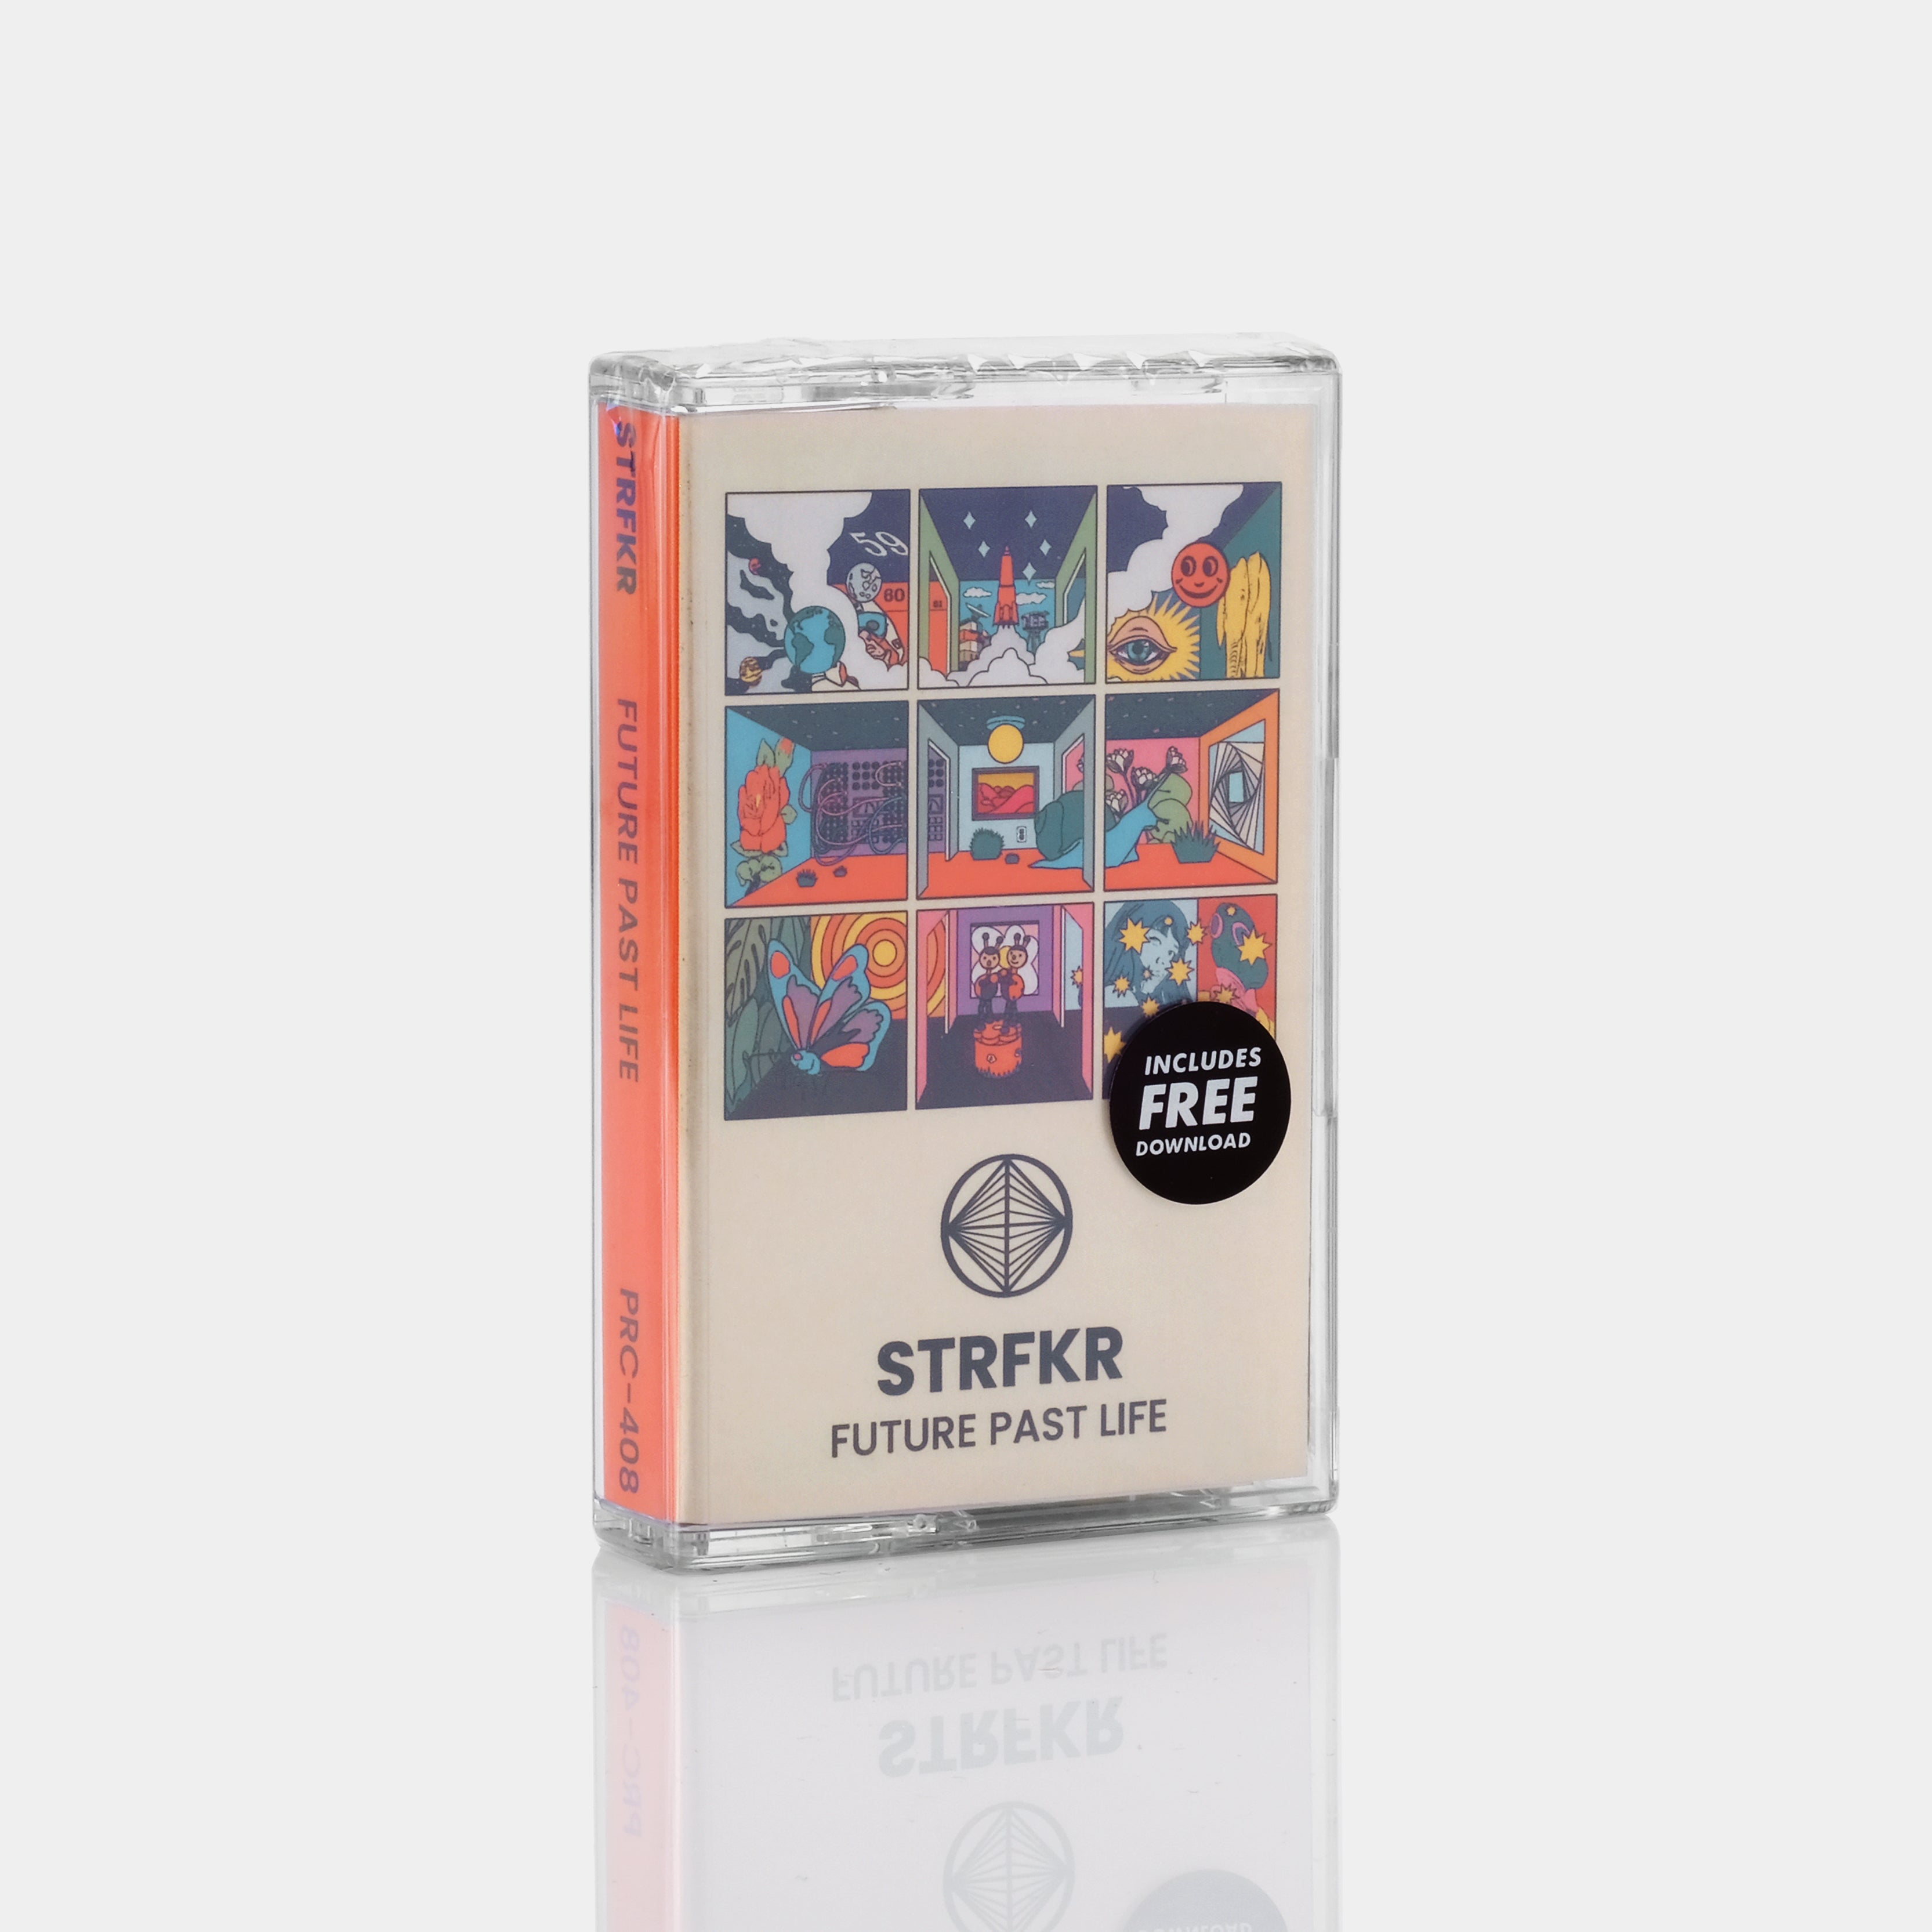 STRFKR - Future Past Life Cassette Tape